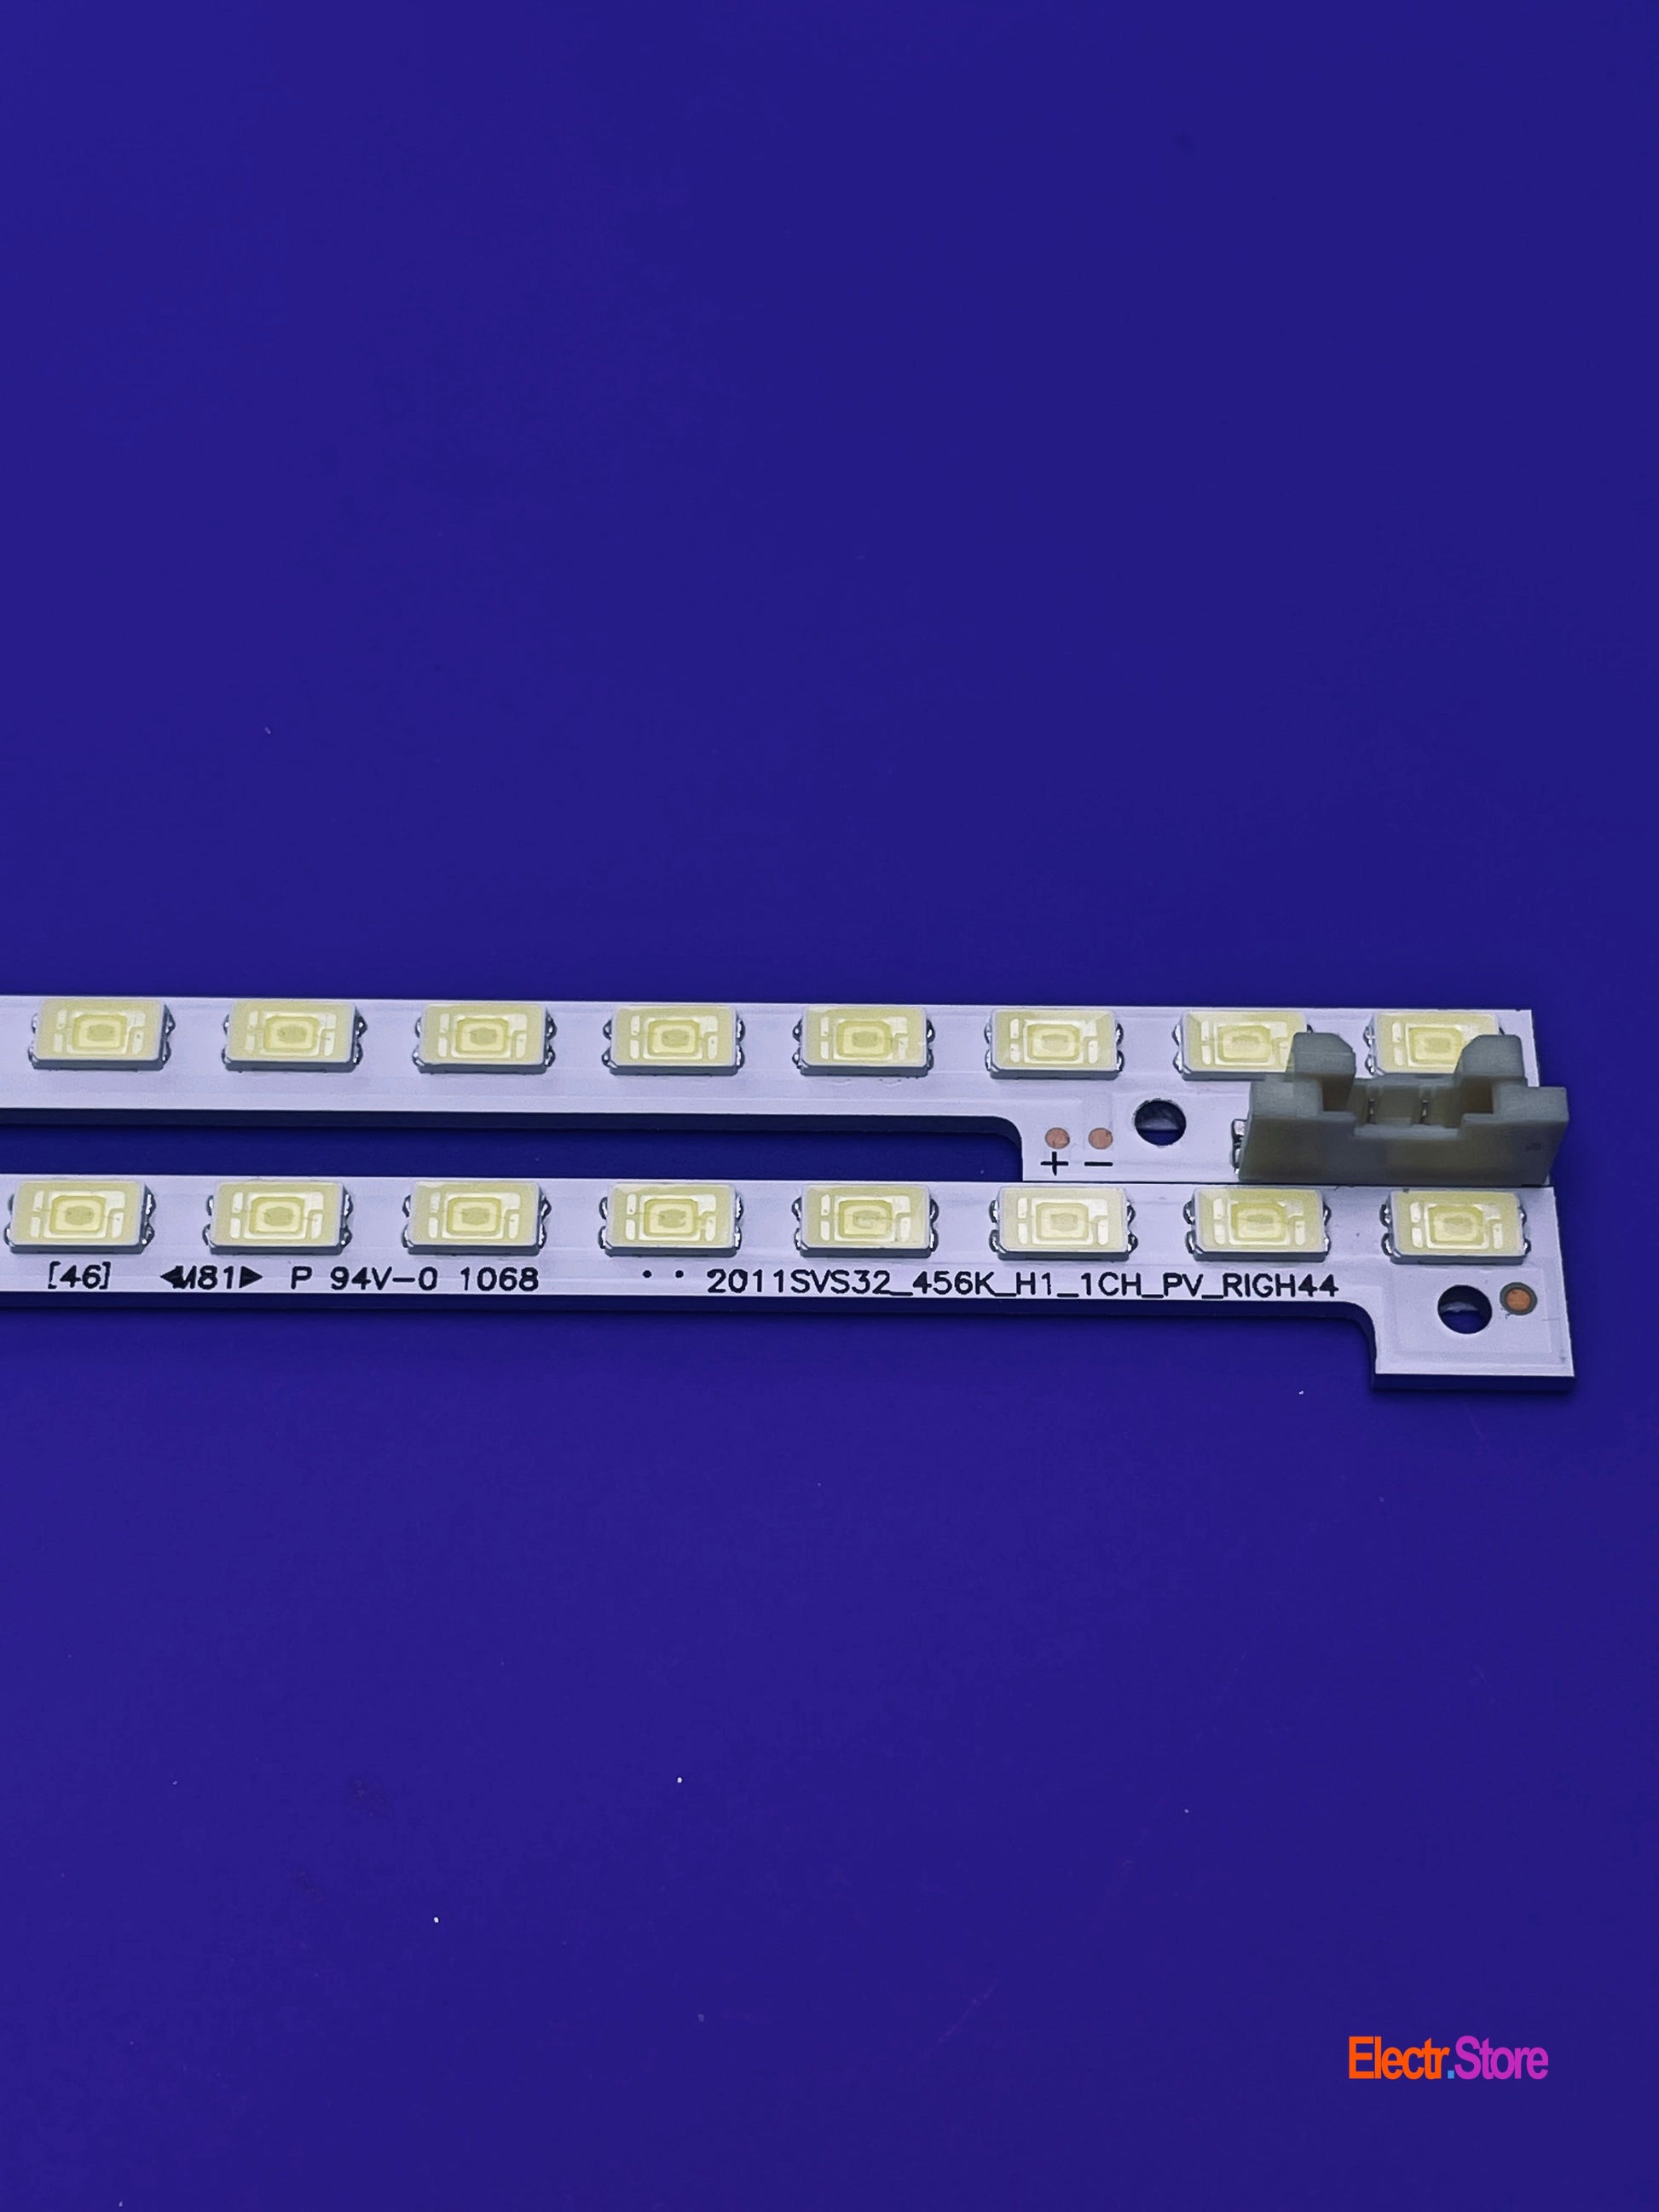 LED Backlight Strip Kits, 2011SVS32_456K_H1_1CH_PV_LEFT44/RIGHT44, JVG4-320SMA-R2/JVG4-320SMB-R2, BN64-01634A, 2X44LED (2 pcs/kit), for TV 32" PANEL: LD320CGC-C2, LTJ320HN03-J, LTJ320HN01-L, LTJ320HN01-V 2011SVS32 32" LED Backlights Matrix Samsung Electr.Store